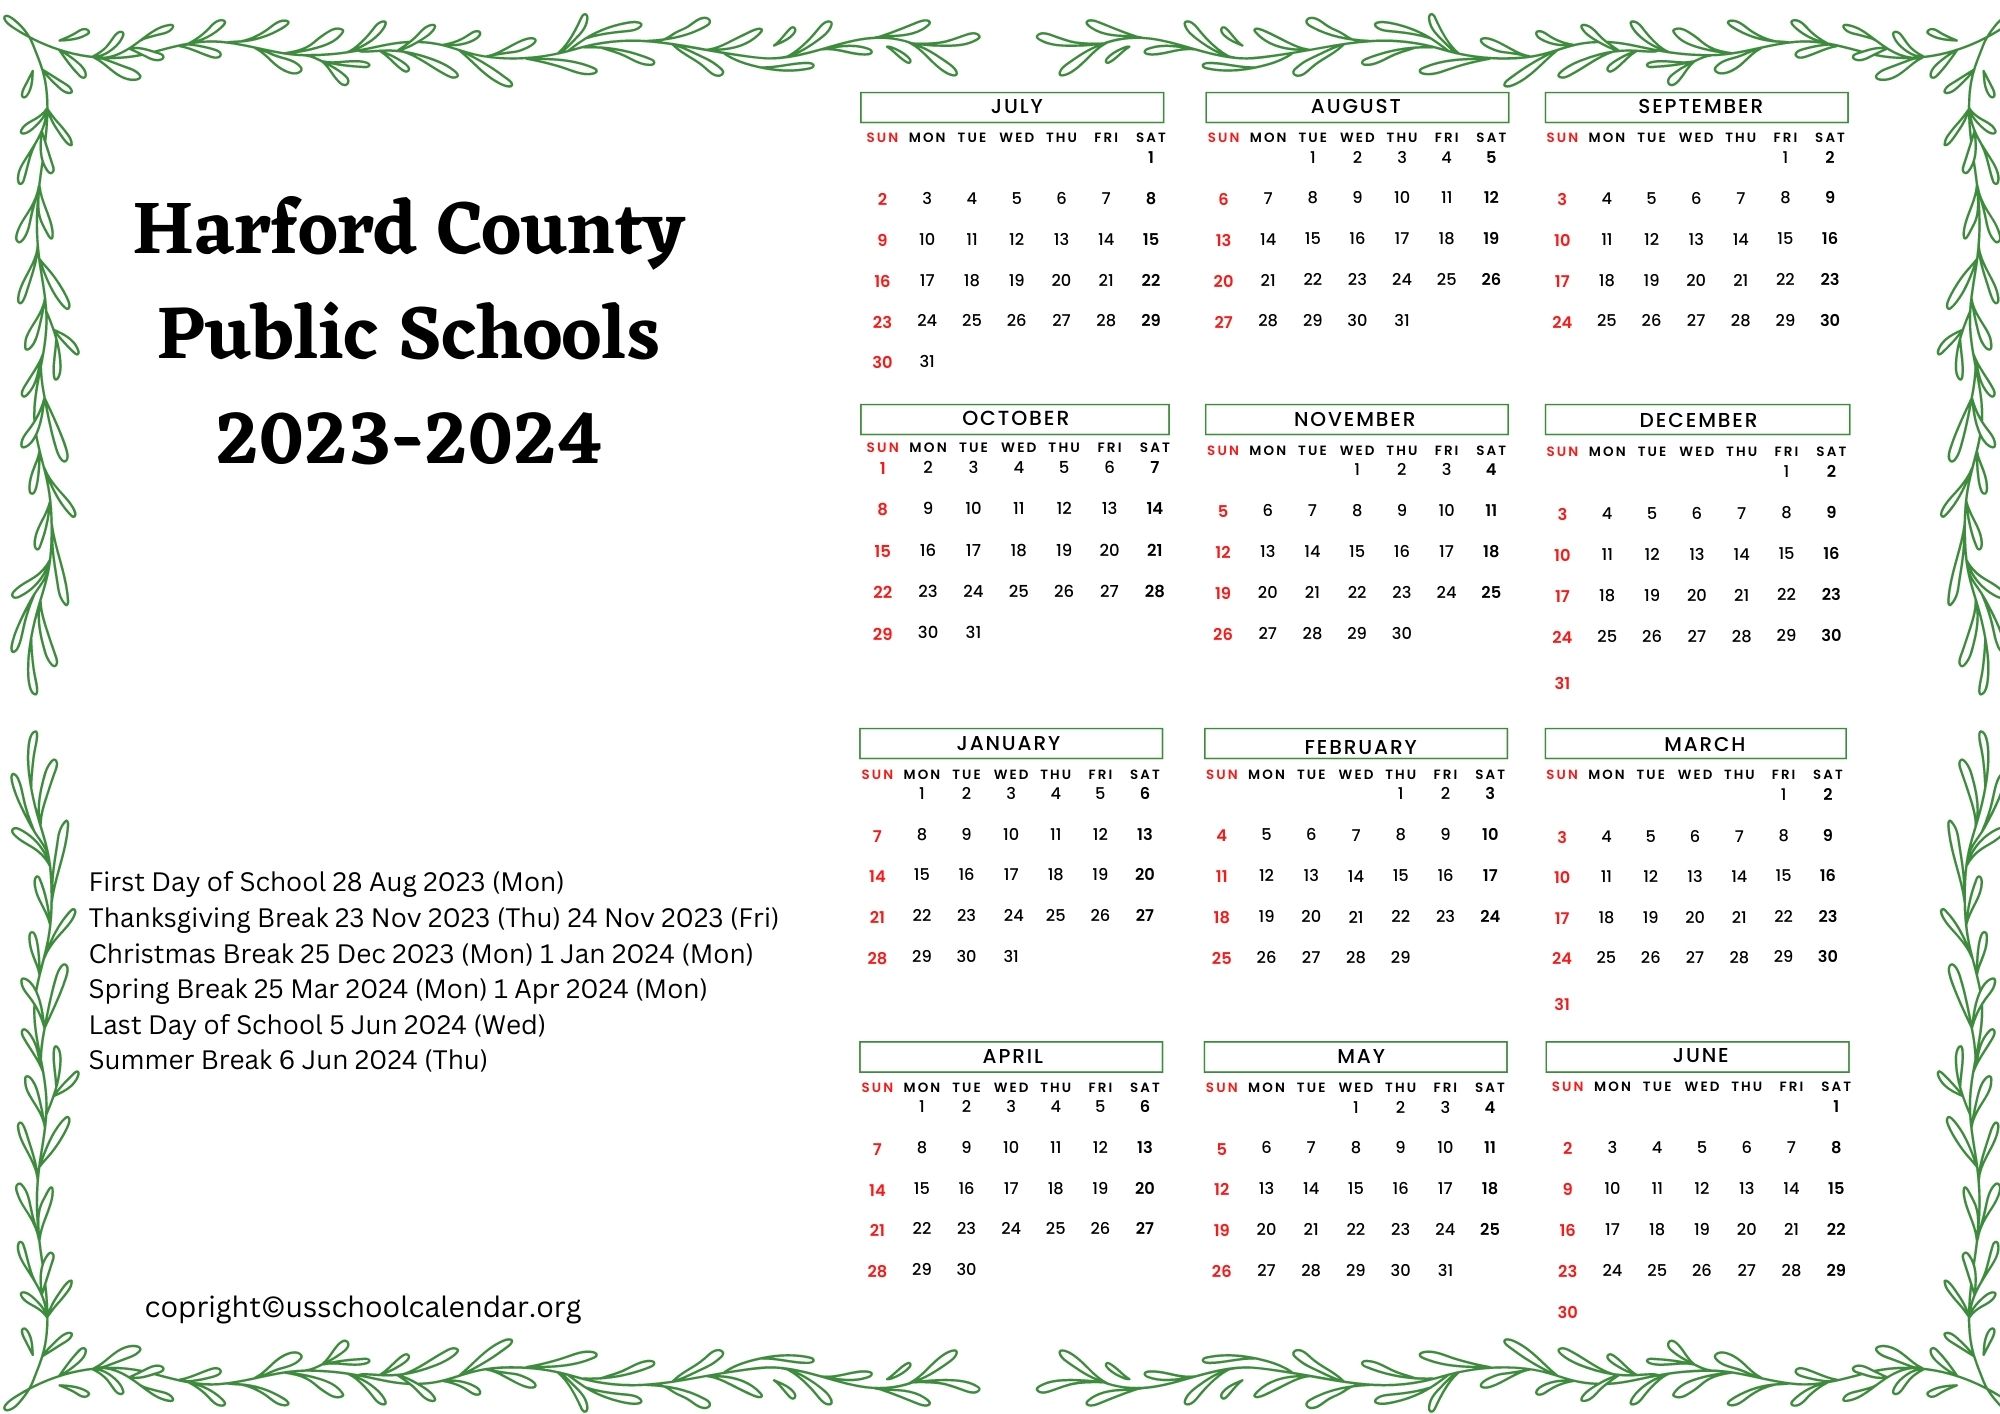 harford-county-public-schools-calendar-with-holidays-2023-2024